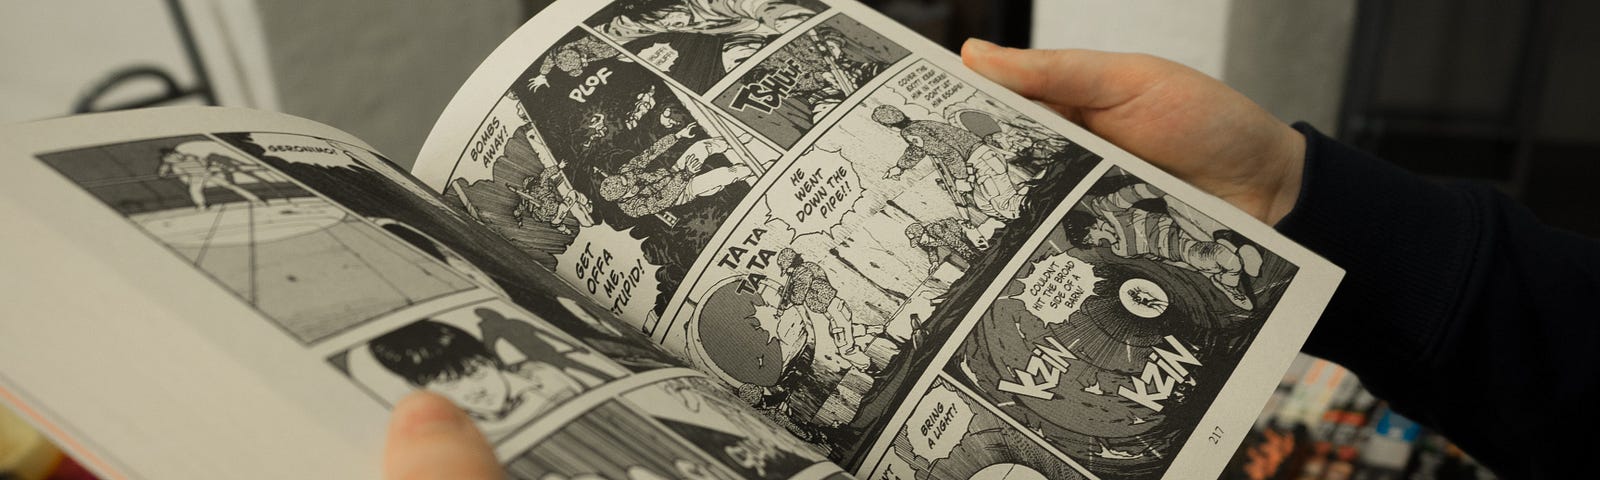 A person reading the manga Akira